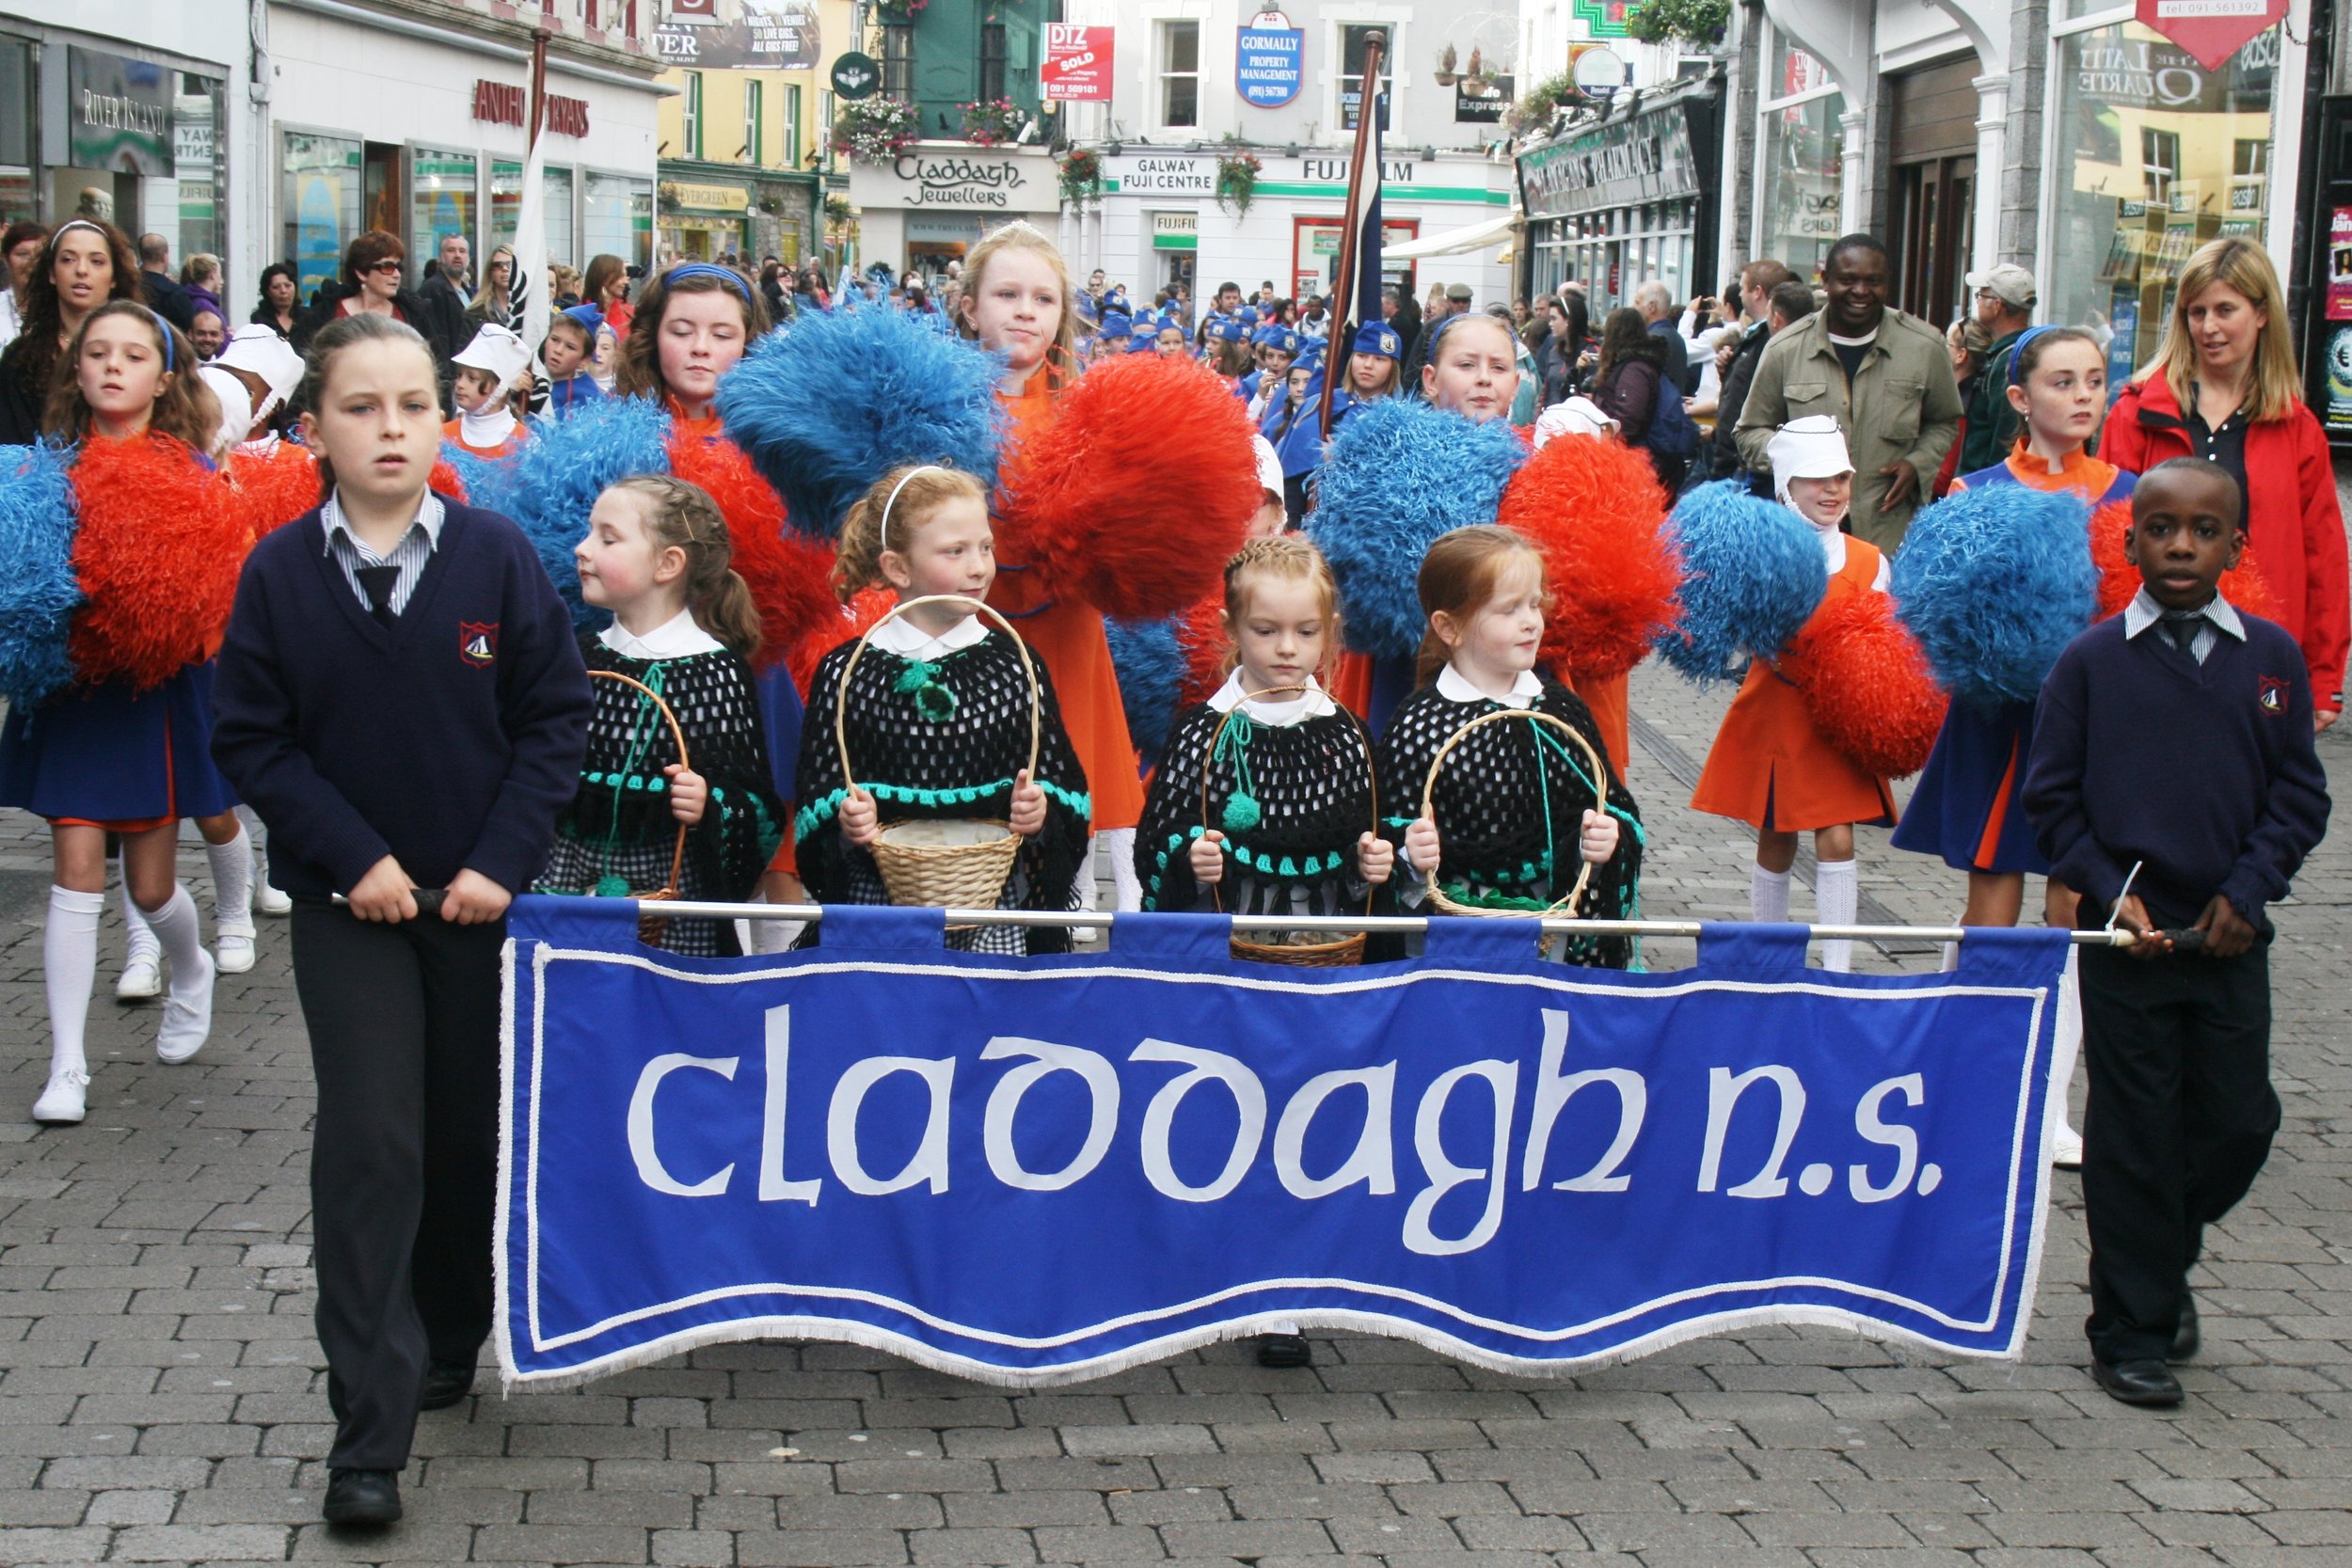 Claddagh NS Parade Banner.JPG